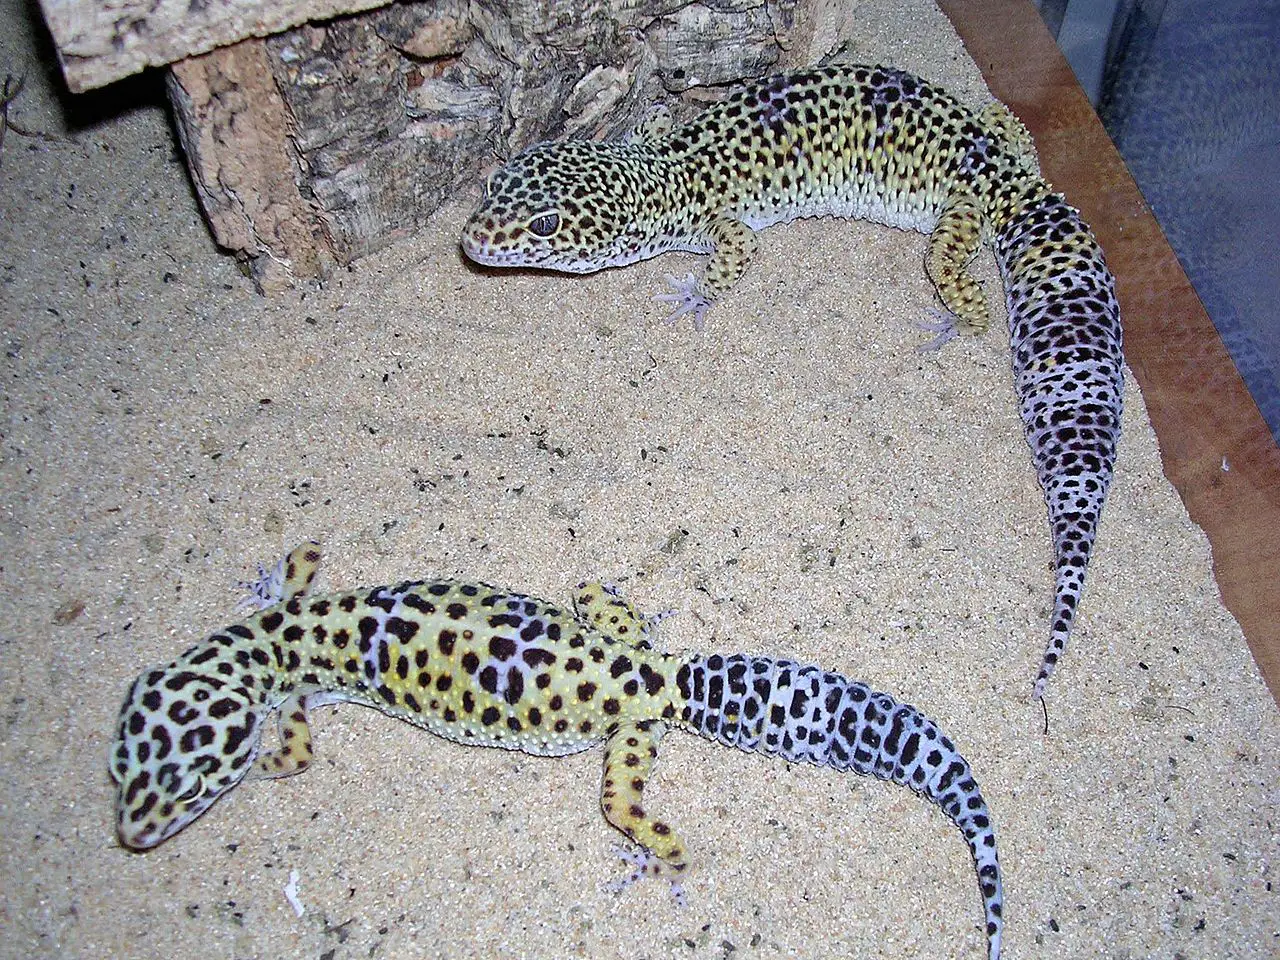 Can Leopard Geckos Live Together? (Explained!)